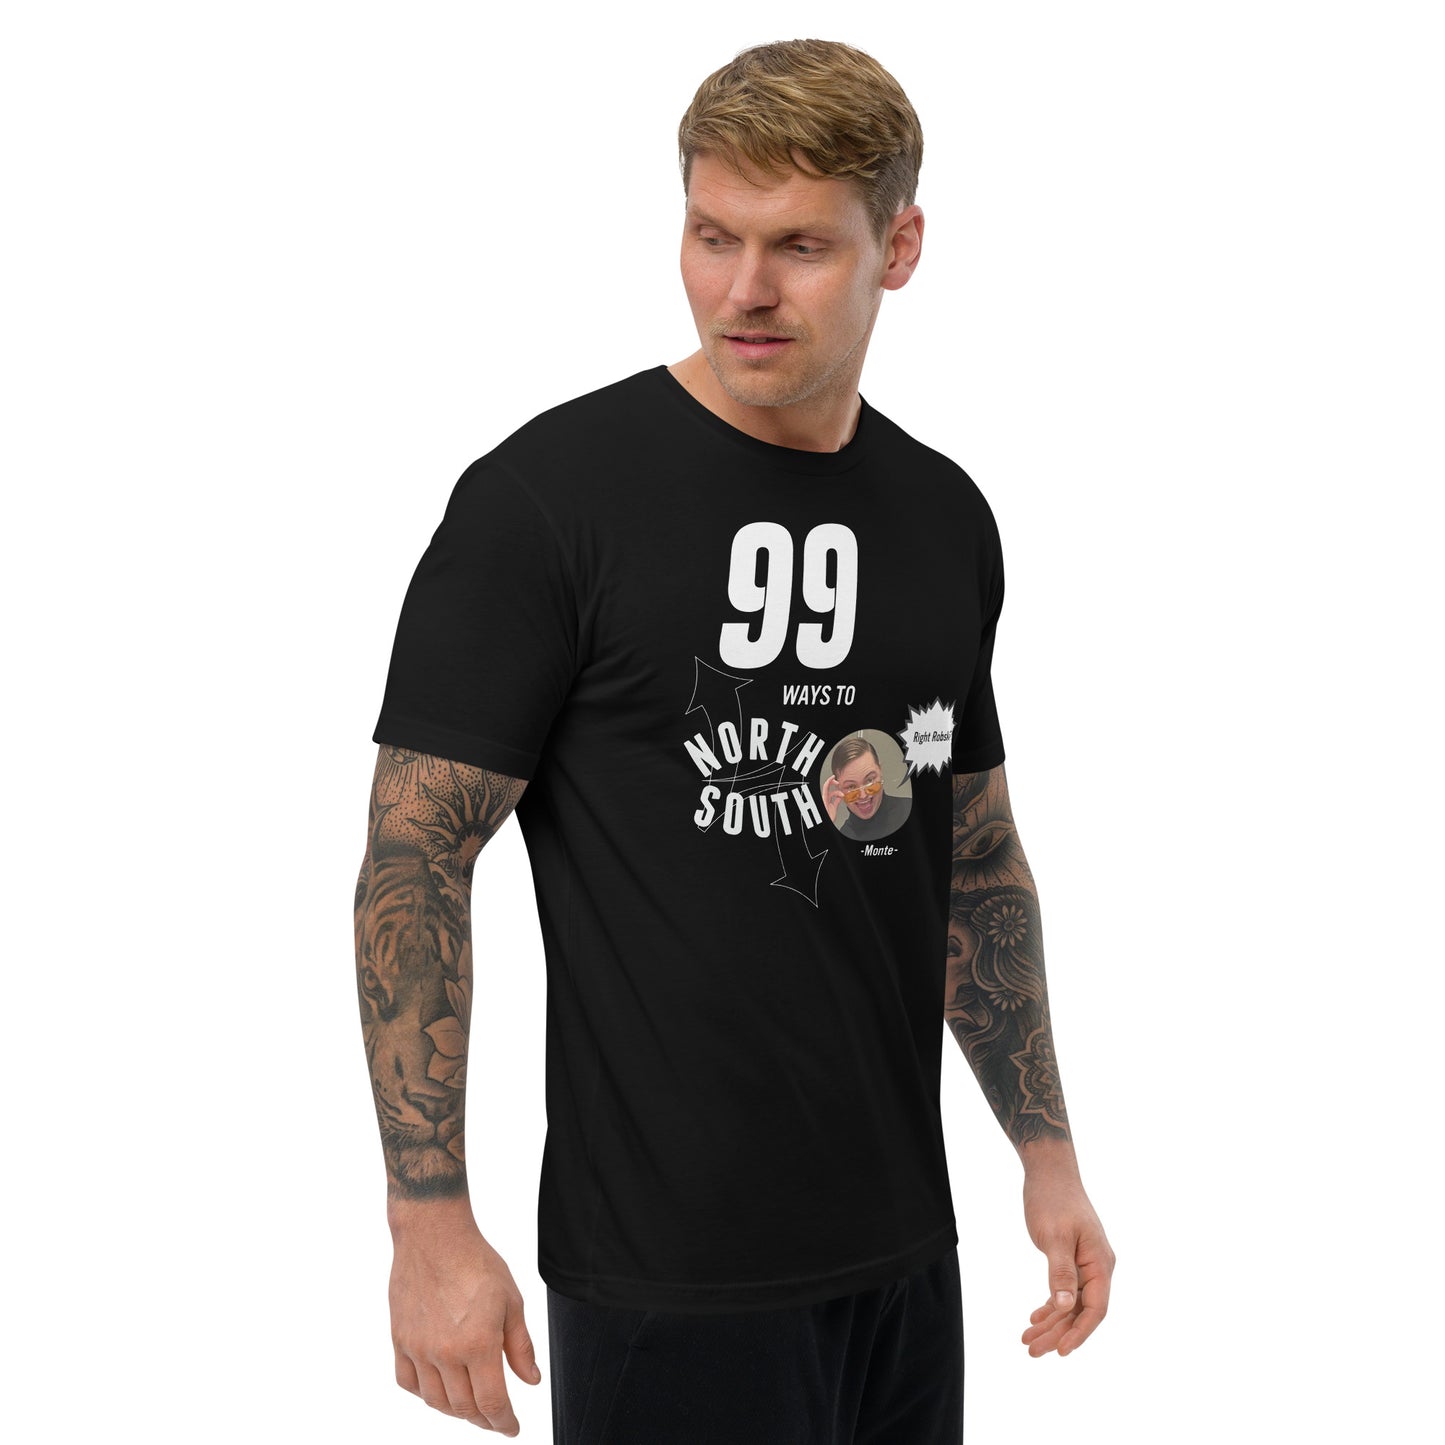 99 Ways Short Sleeve T-shirt